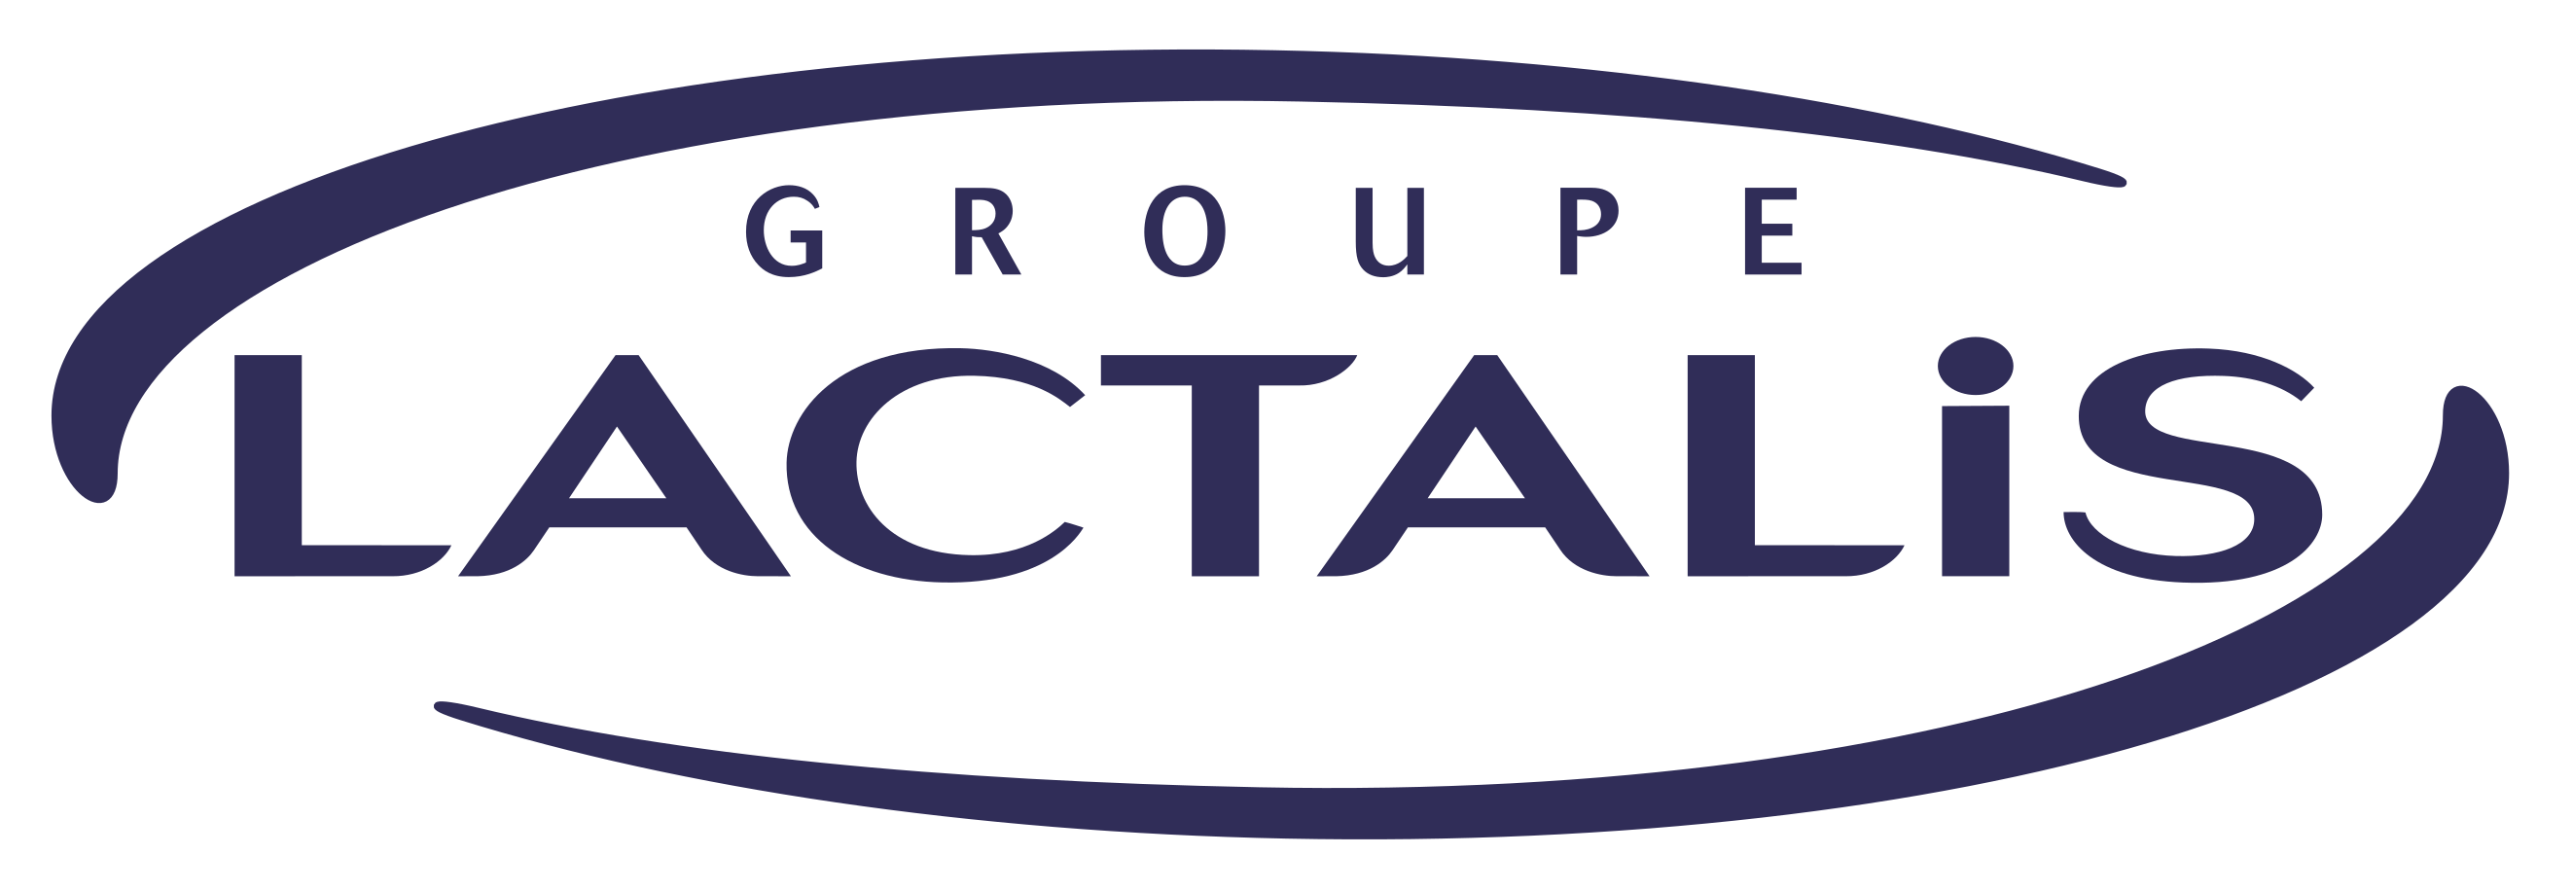 Lactalis logo - Tryane Analytics for internal communications